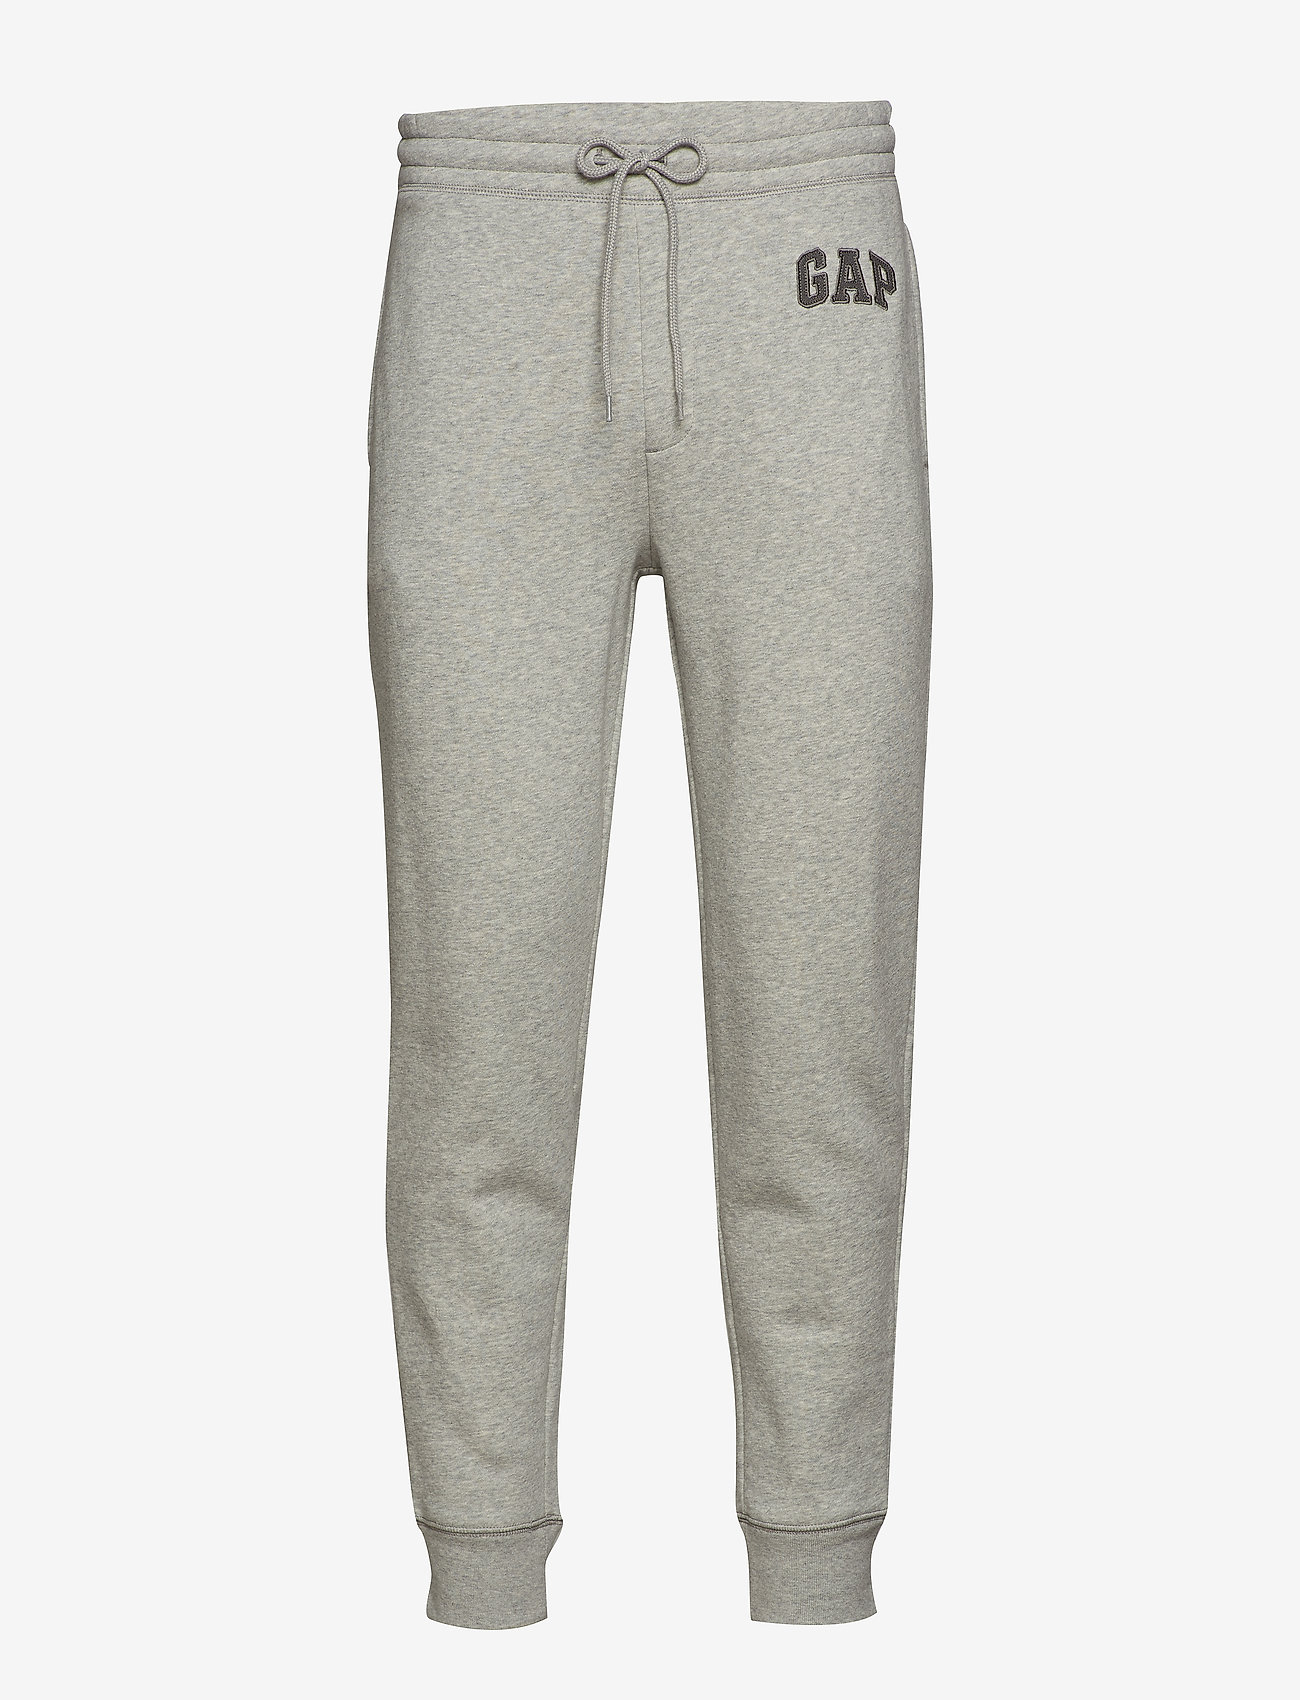 gap logo sweatpants for womens